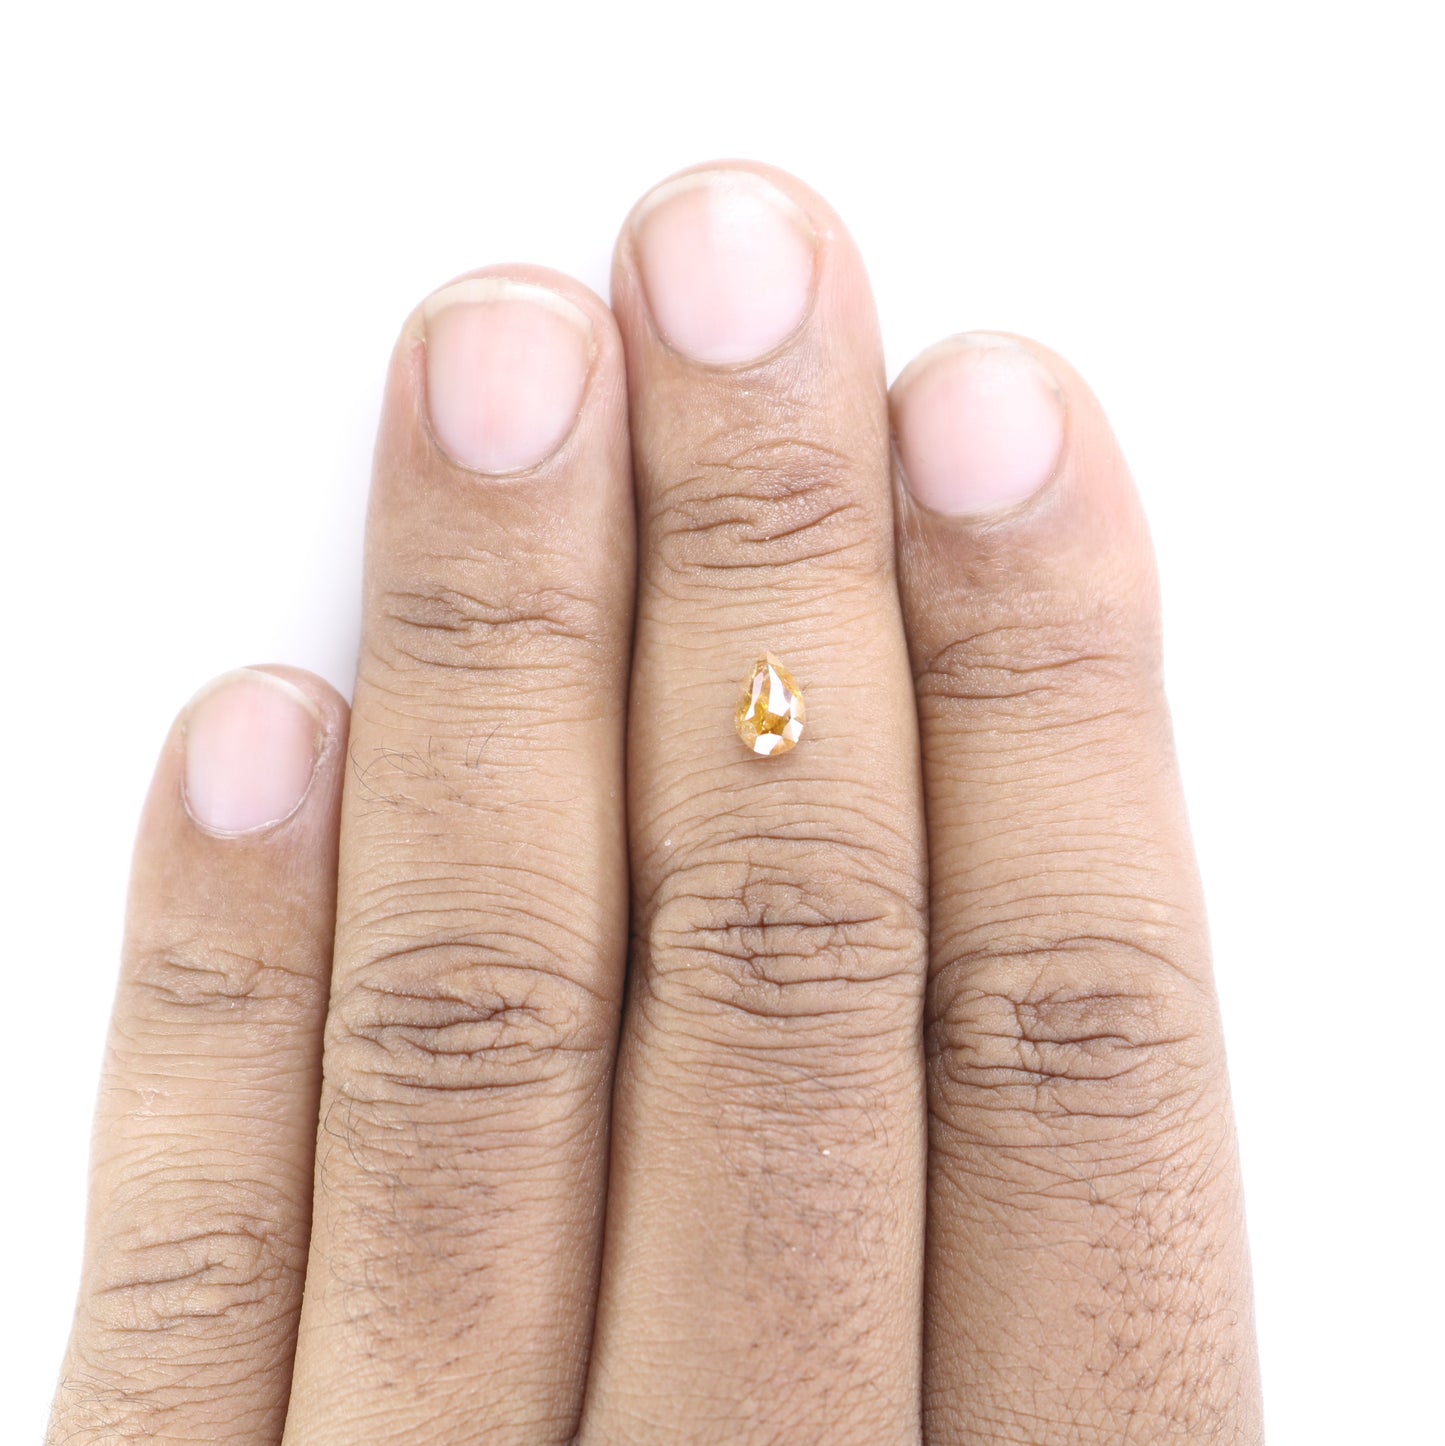 0.62 CT Golden Yellow Brilliant Cut Pear Diamond For Halo Pendant | Prong Set Pear Diamond Jewelry